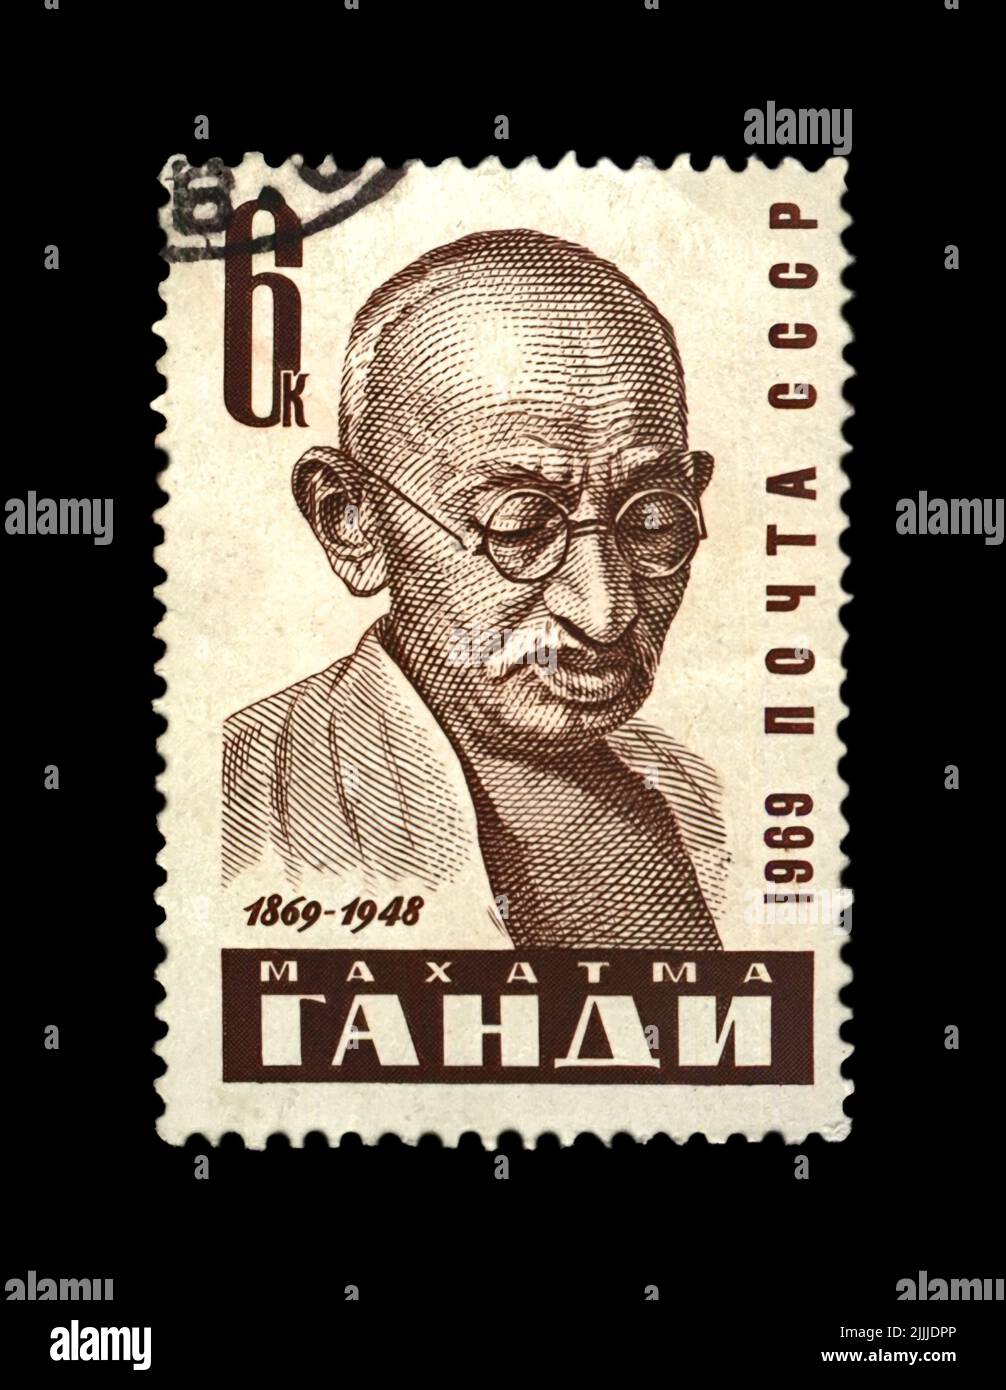 Mahatma Gandhi (1869-1948) aka Mohandas Karamchand Gandhi, famous indian activist ,canceled stamp printed in the USSR Stock Photo